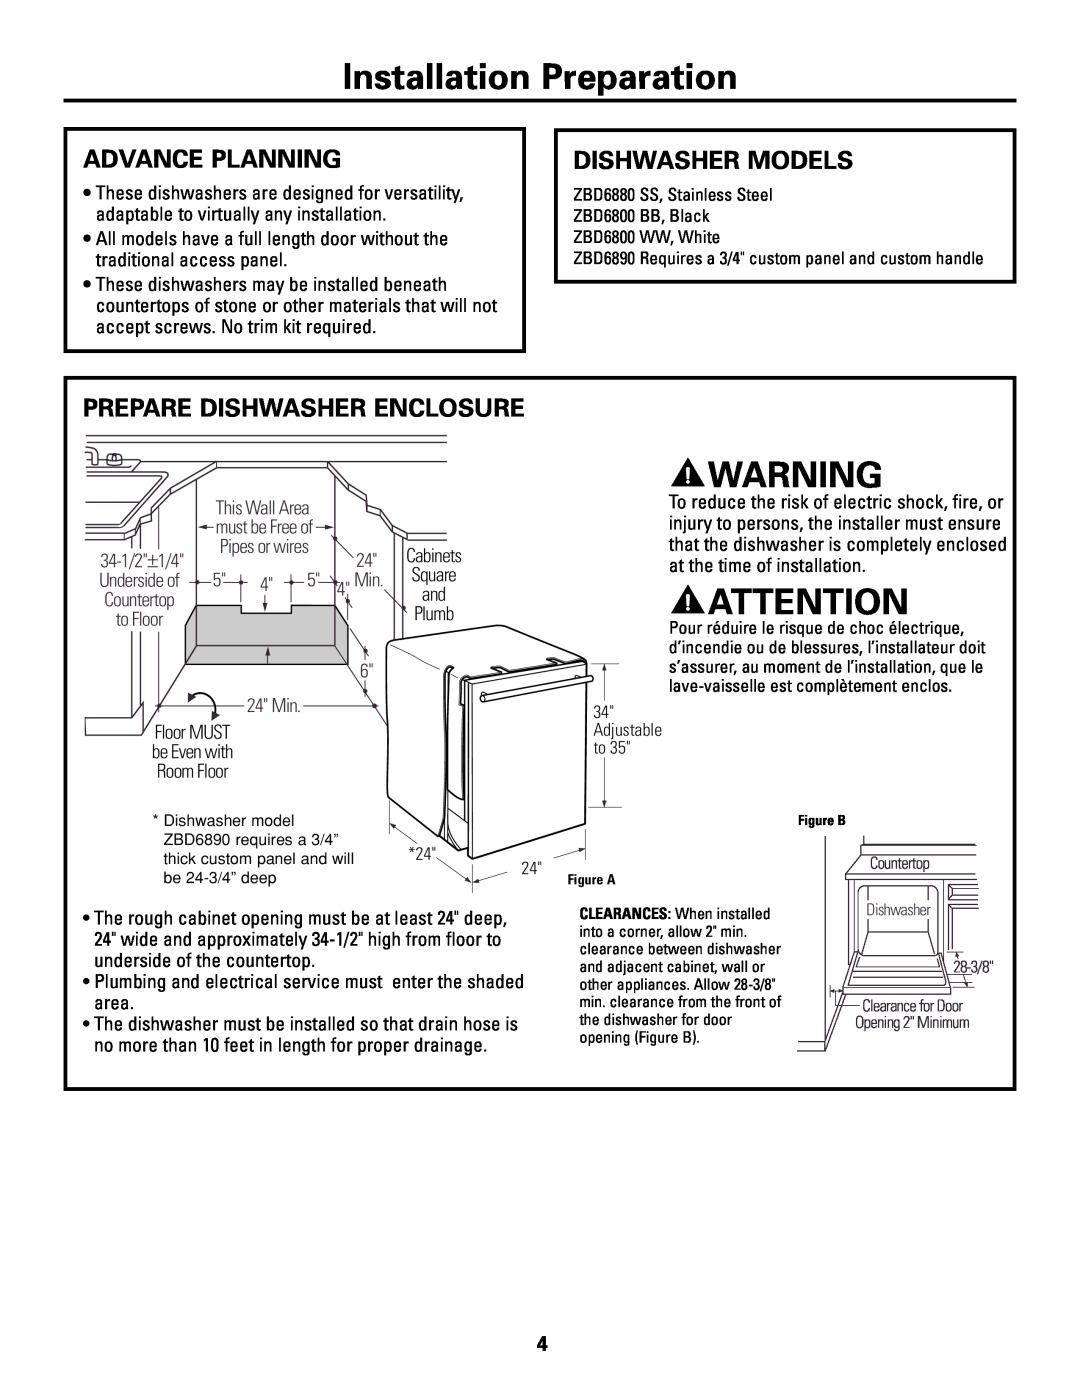 GE Monogram ZBD6800K Advance Planning, Dishwasher Models, Prepare Dishwasher Enclosure, Installation Preparation, 6 24 Min 